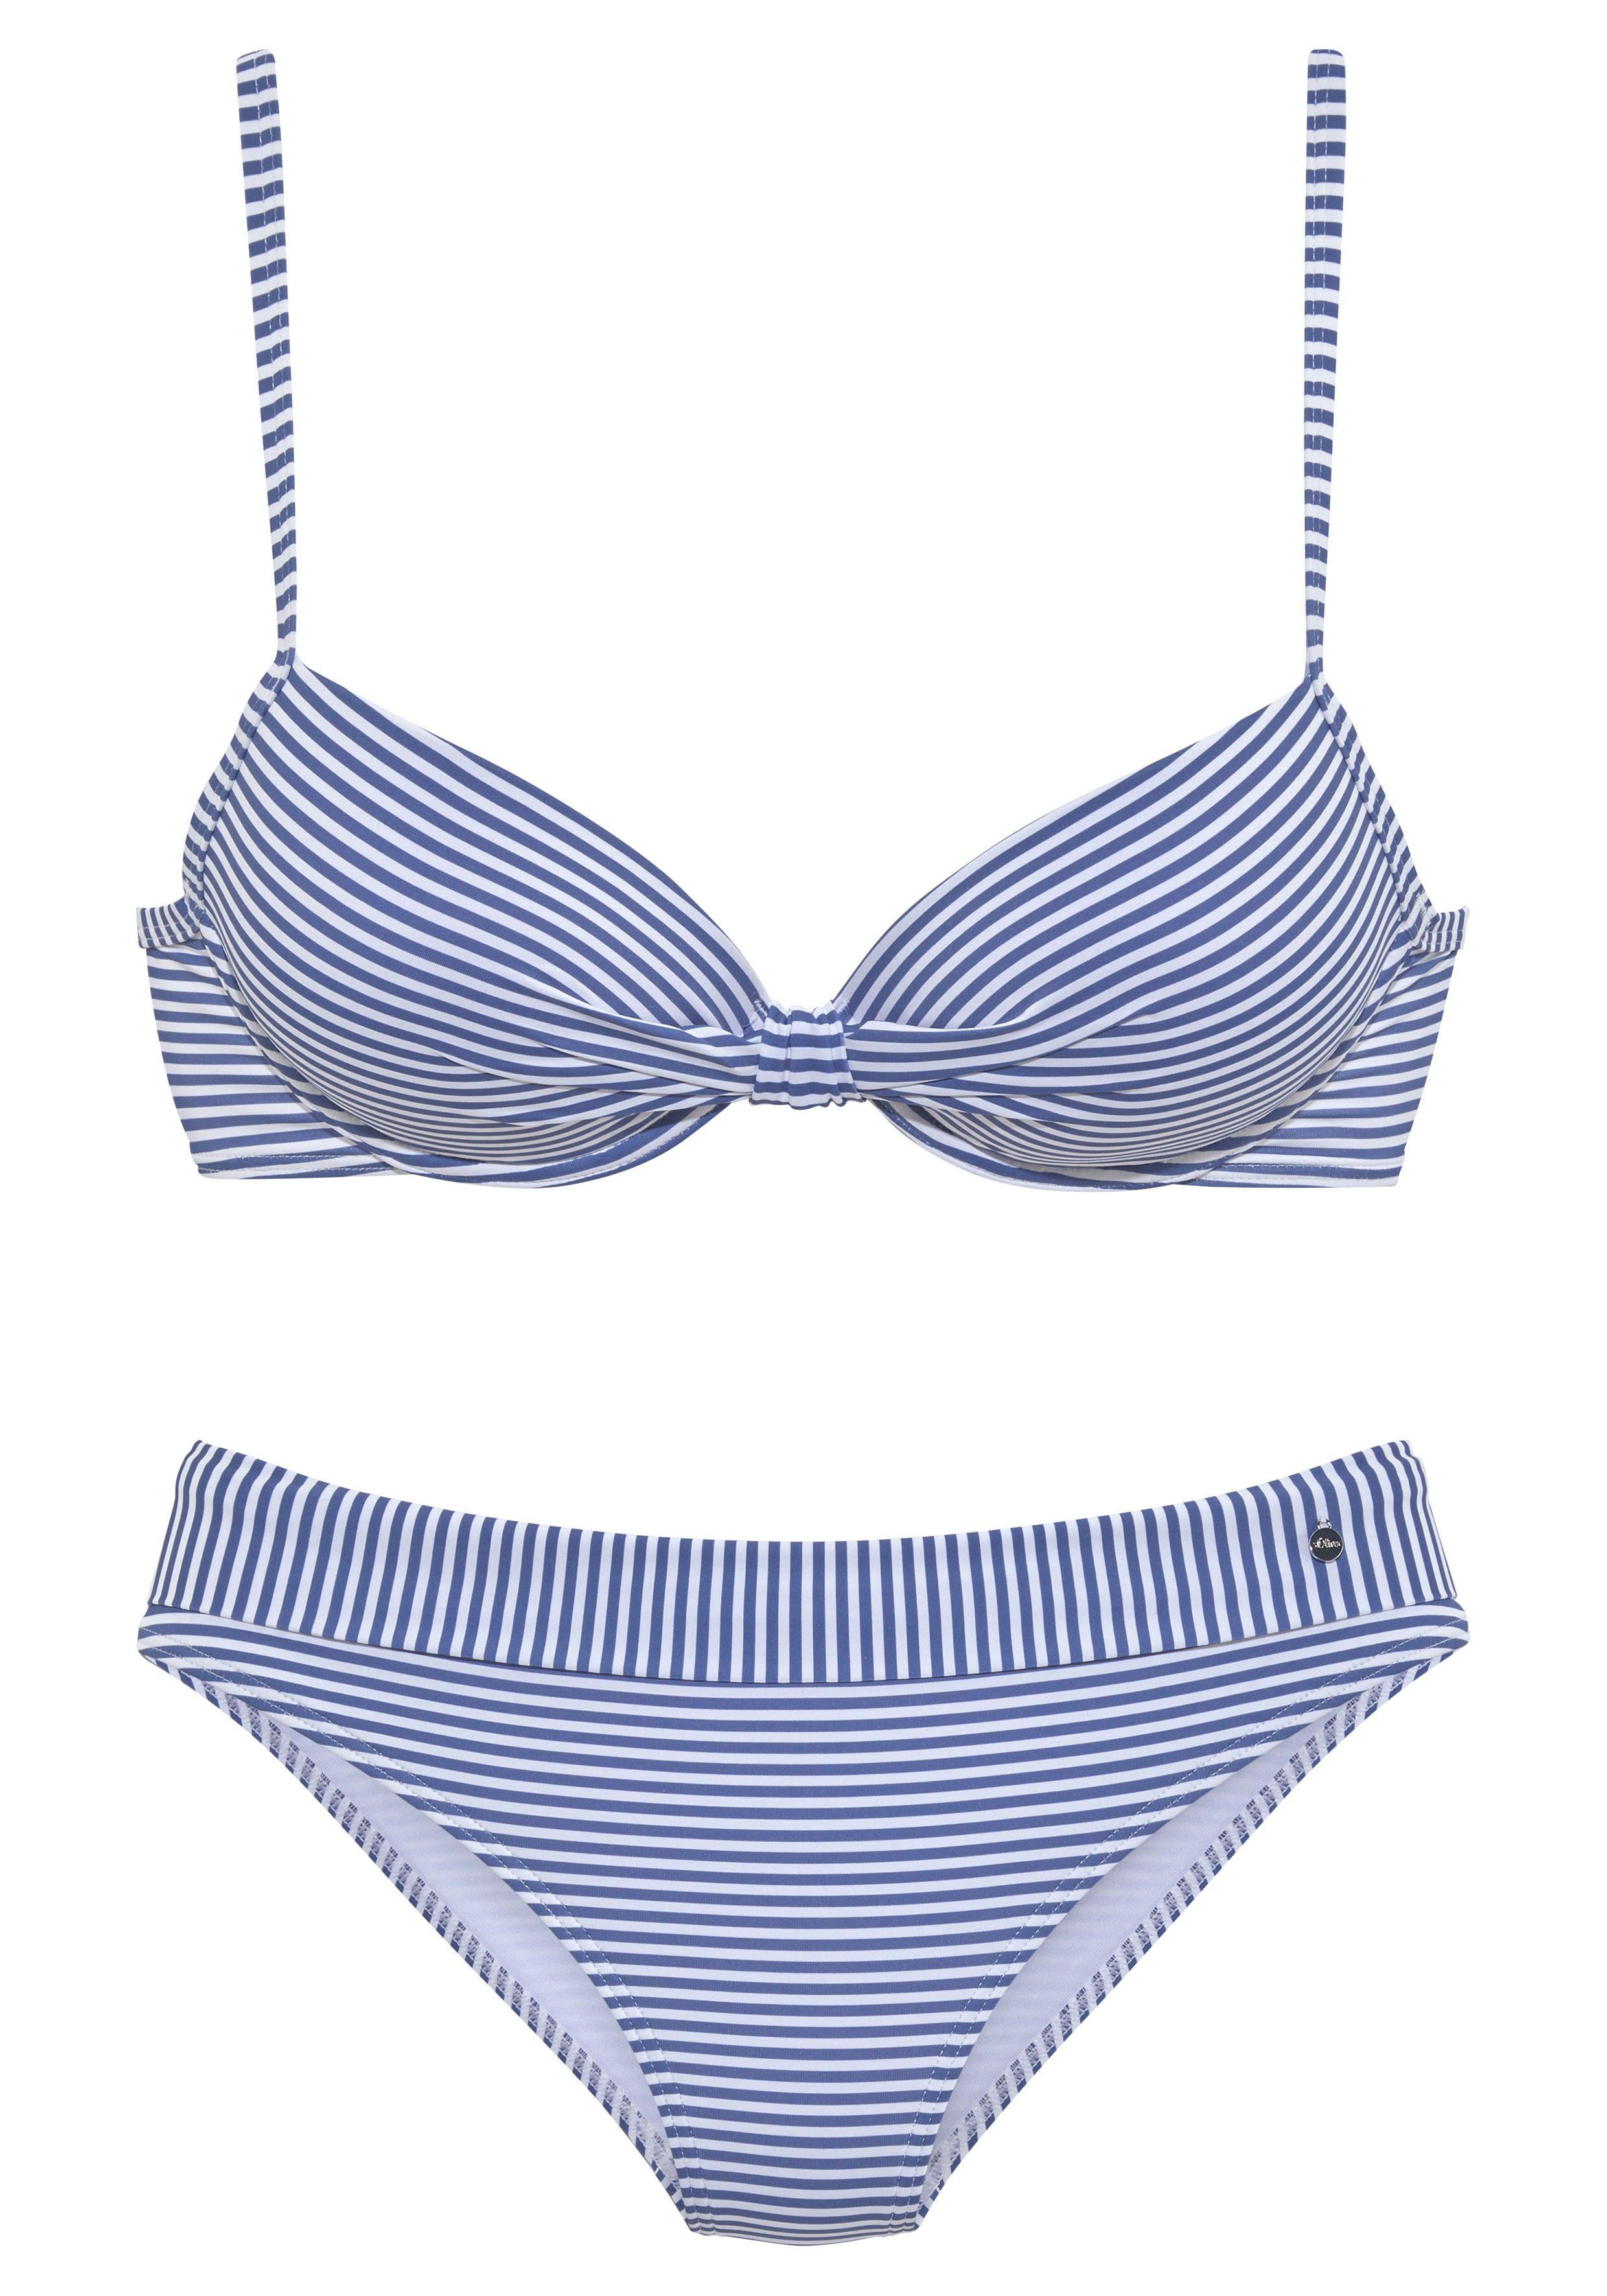 Knoten-Optik s.Oliver hellblau-weiß Bügel-Bikini in